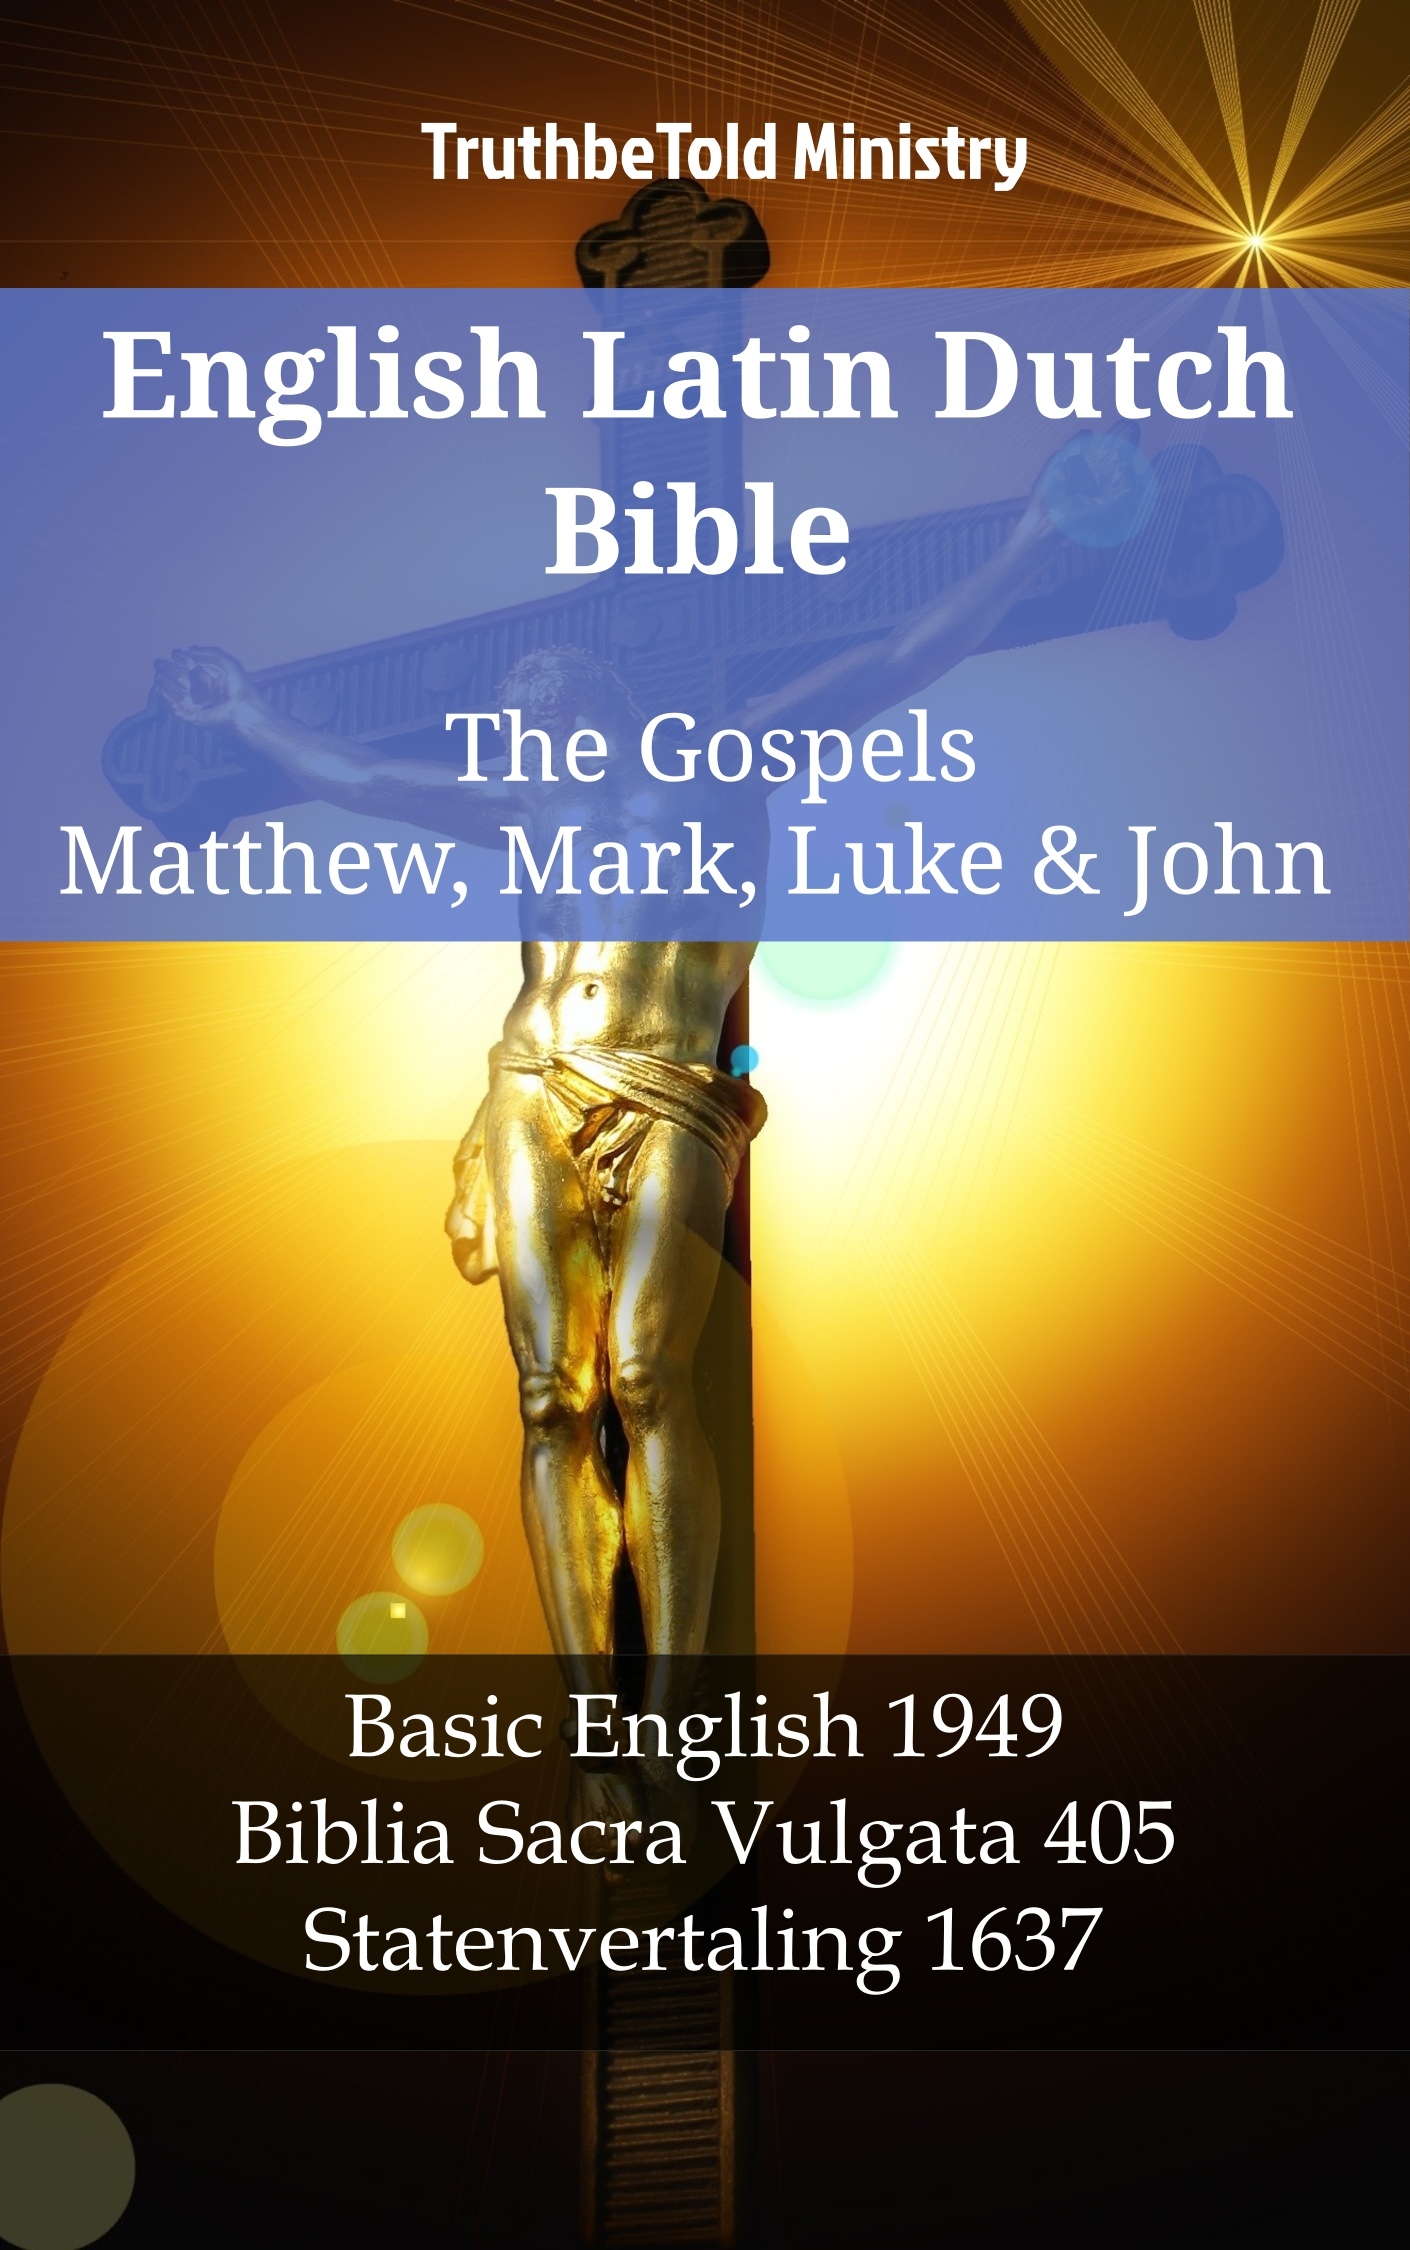 English Latin Dutch Bible - The Gospels - Matthew, Mark, Luke & John